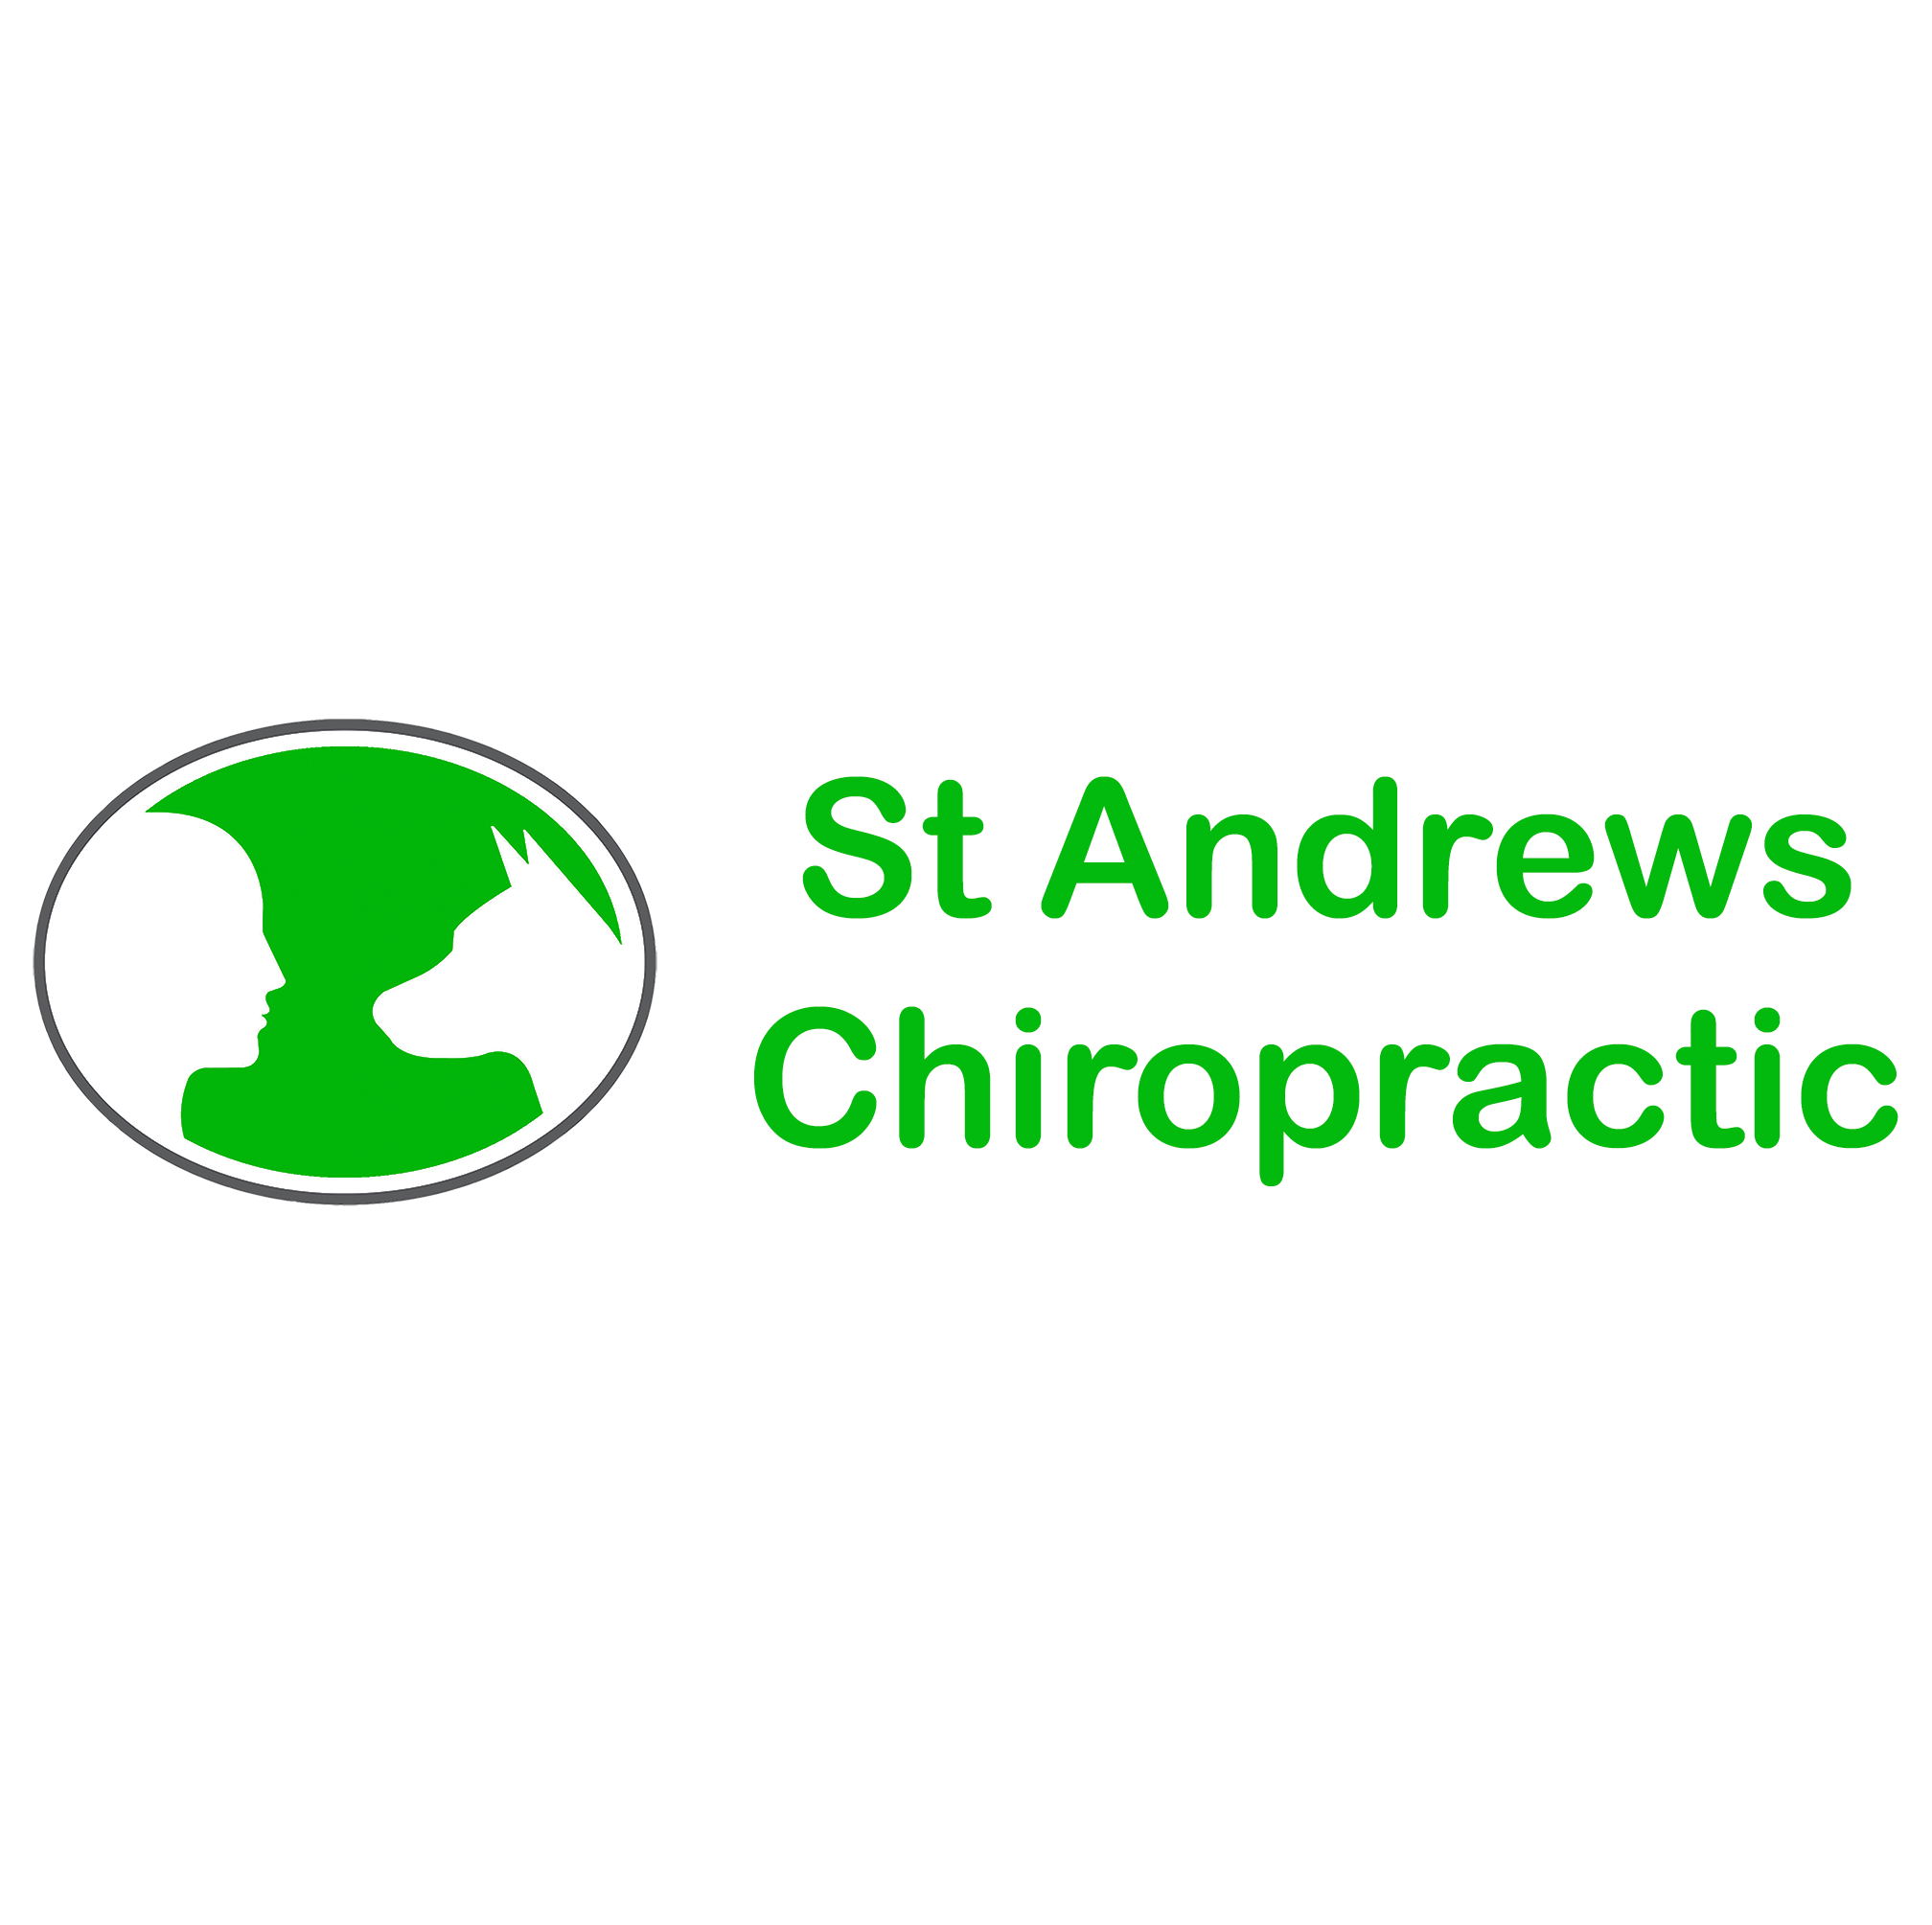 St Andrews Chiropractic